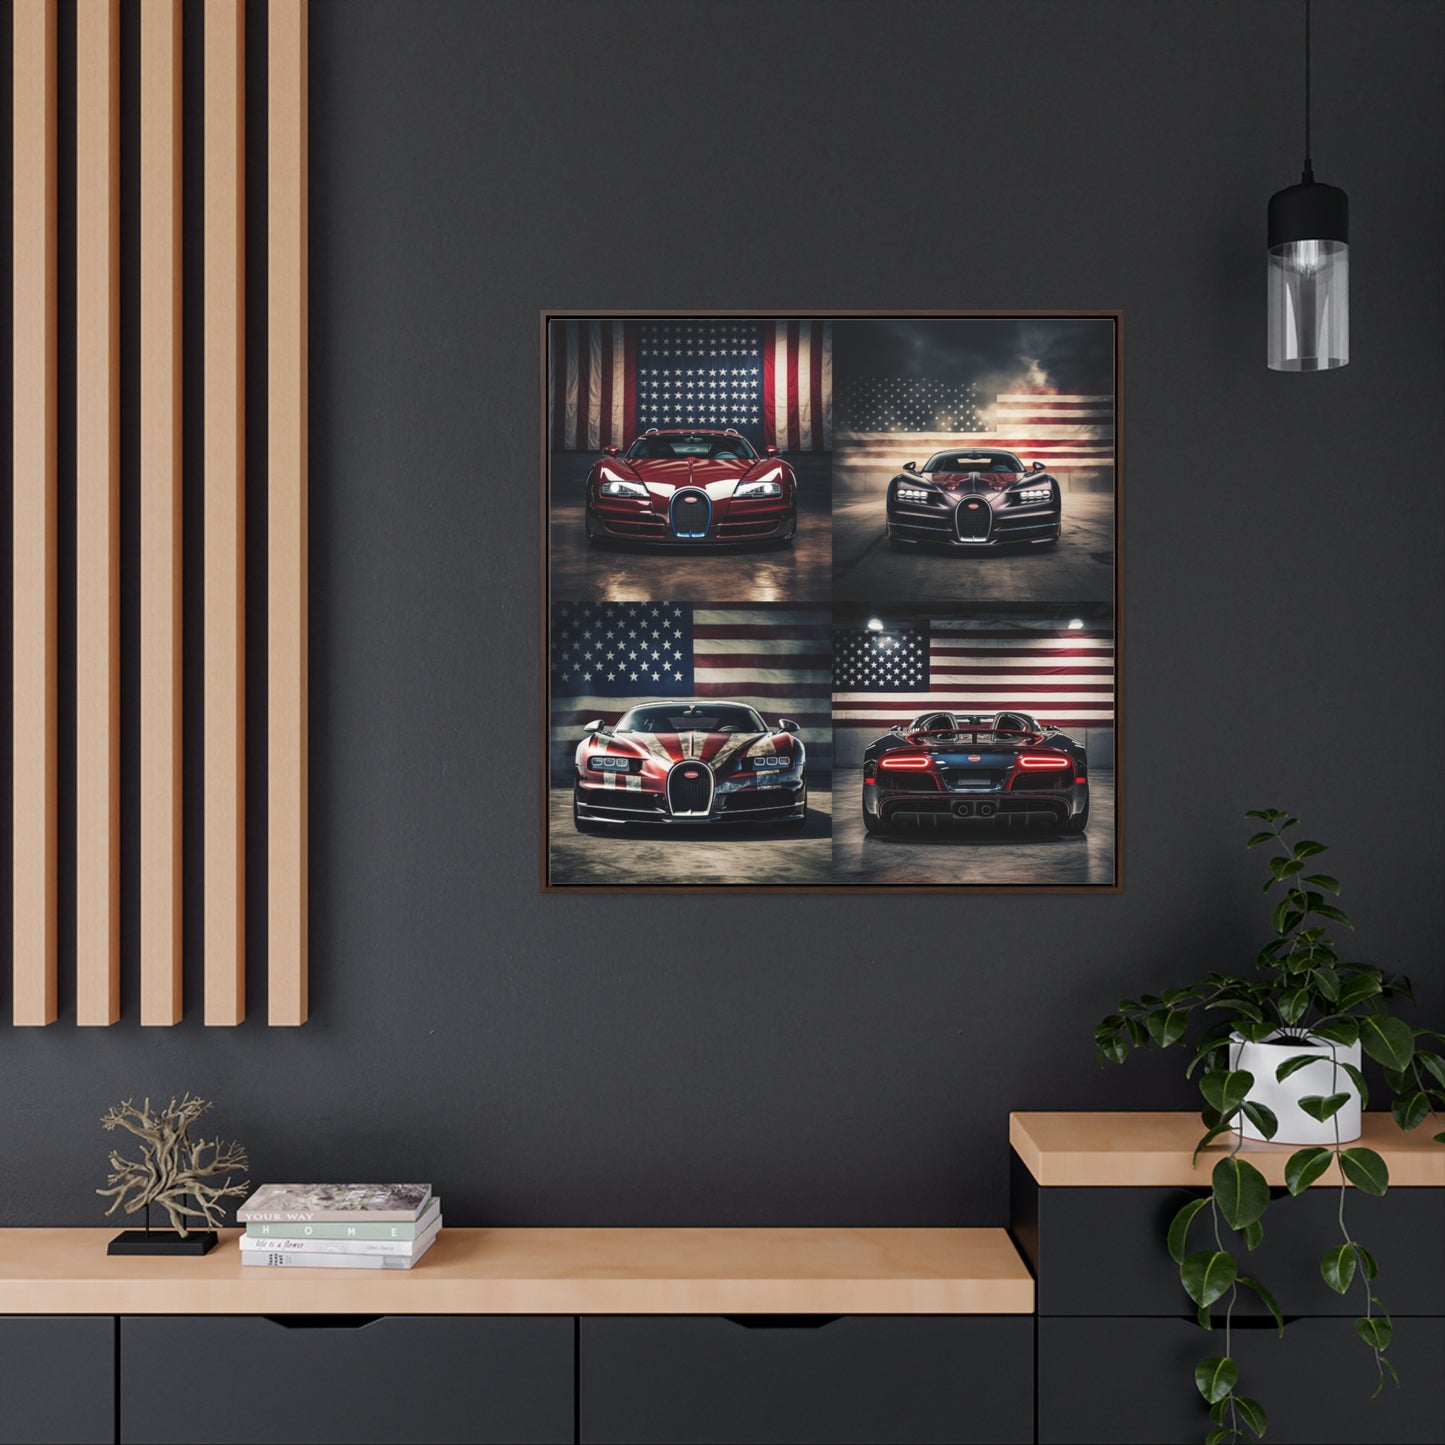 Gallery Canvas Wraps, Square Frame American Flag Background Bugatti 5